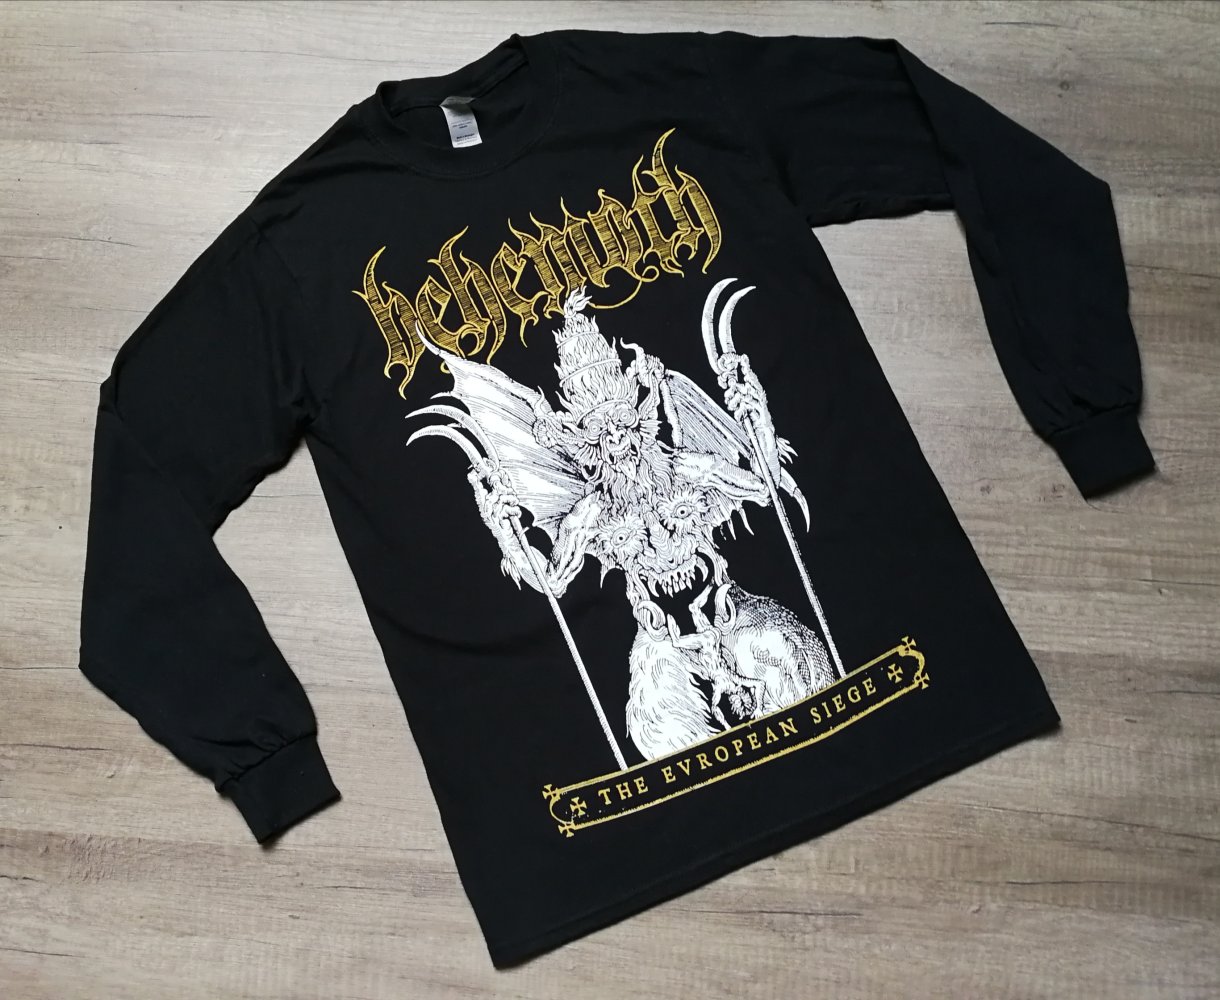 Behemoth Bandshirt Longsleeve Tourshirt NEU The European Siege Tourdaten Unisex Gr. S